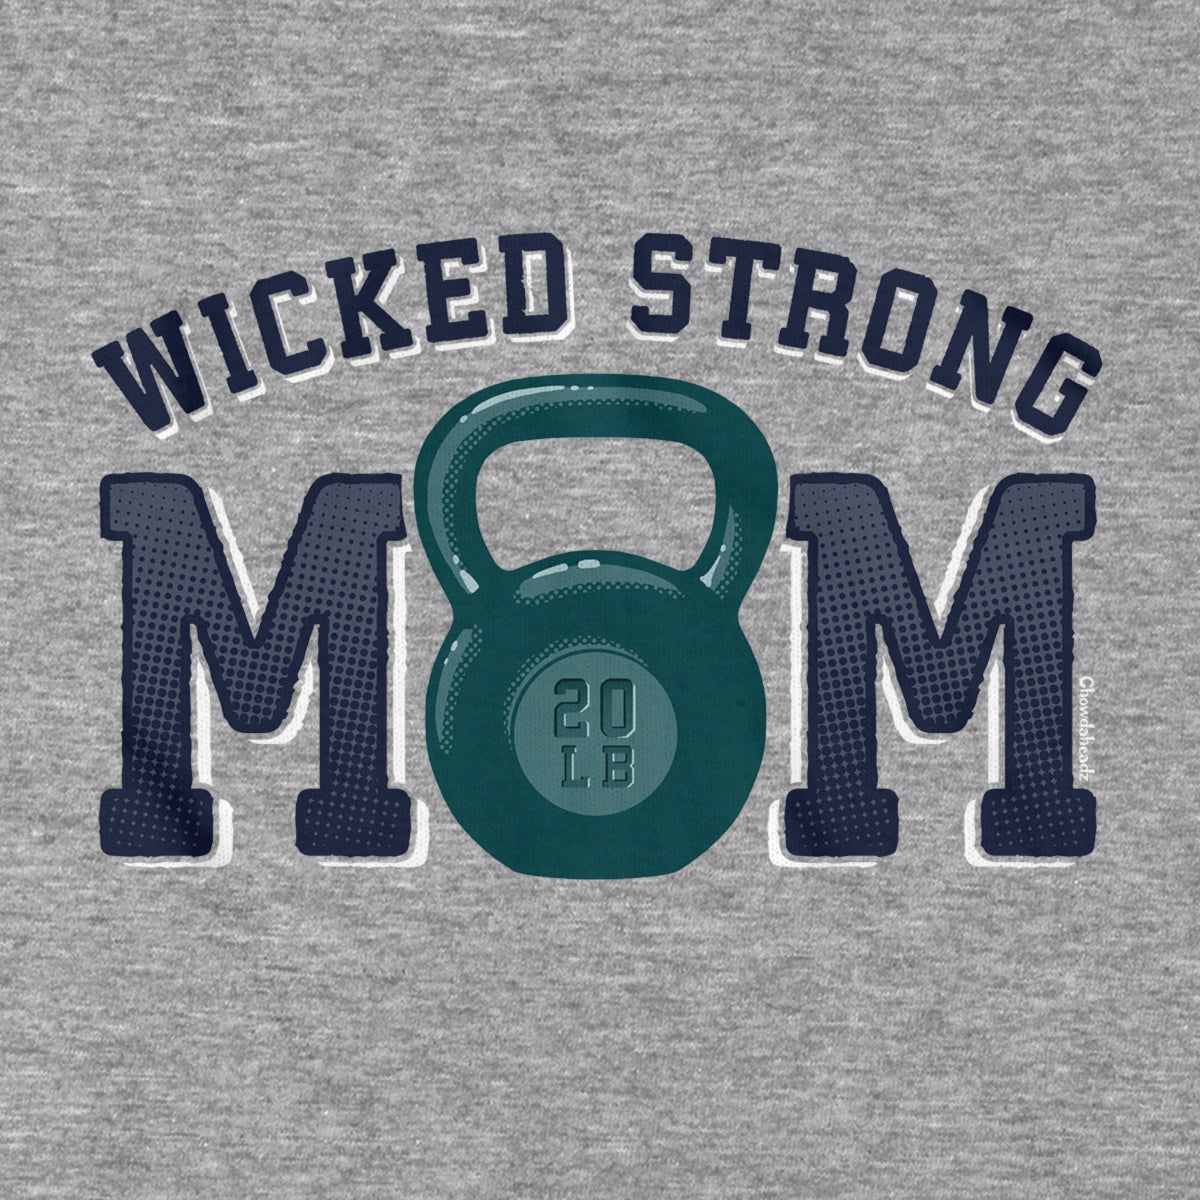 Wicked Strong Mom Kettlebell Hoodie - Chowdaheadz